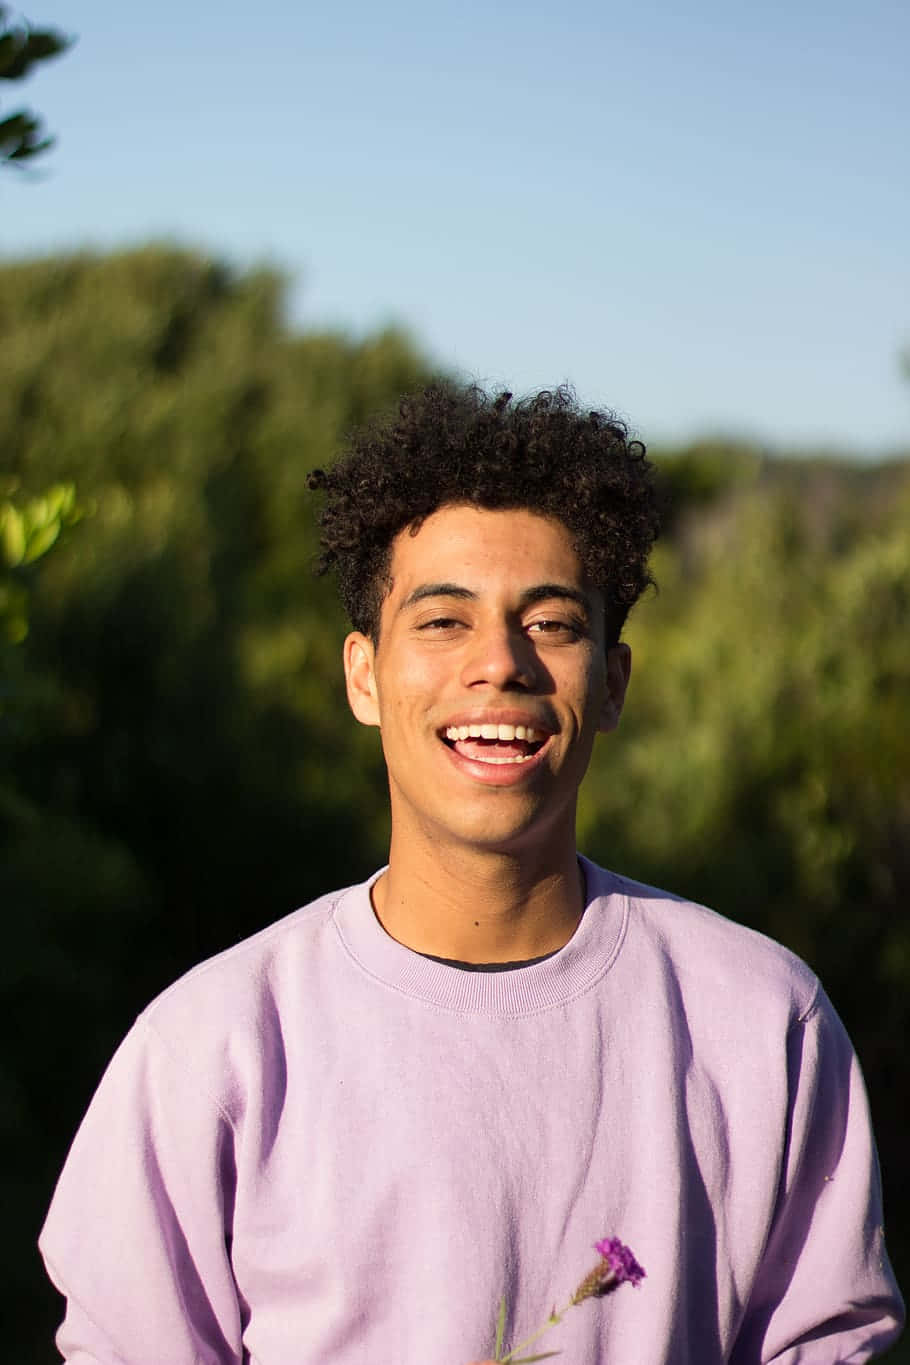 Smiling Boyin Purple Sweatshirt Outdoors Wallpaper